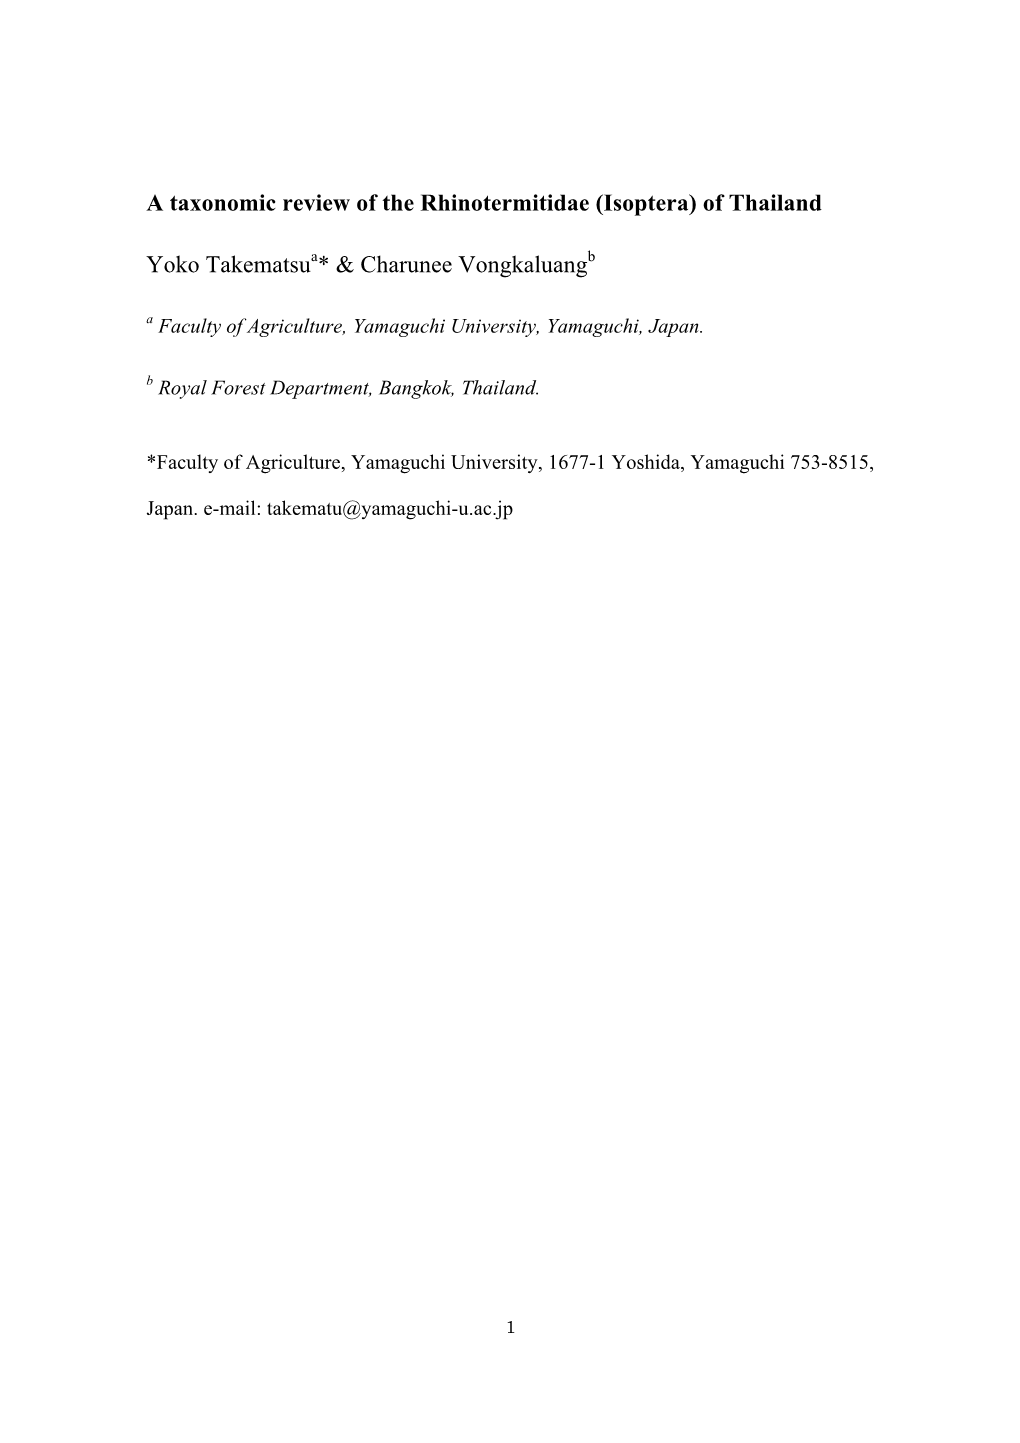 A Taxonomic Review of the Rhinotermitidae (Isoptera) of Thailand Yoko Takematsua* & Charunee Vongkaluangb